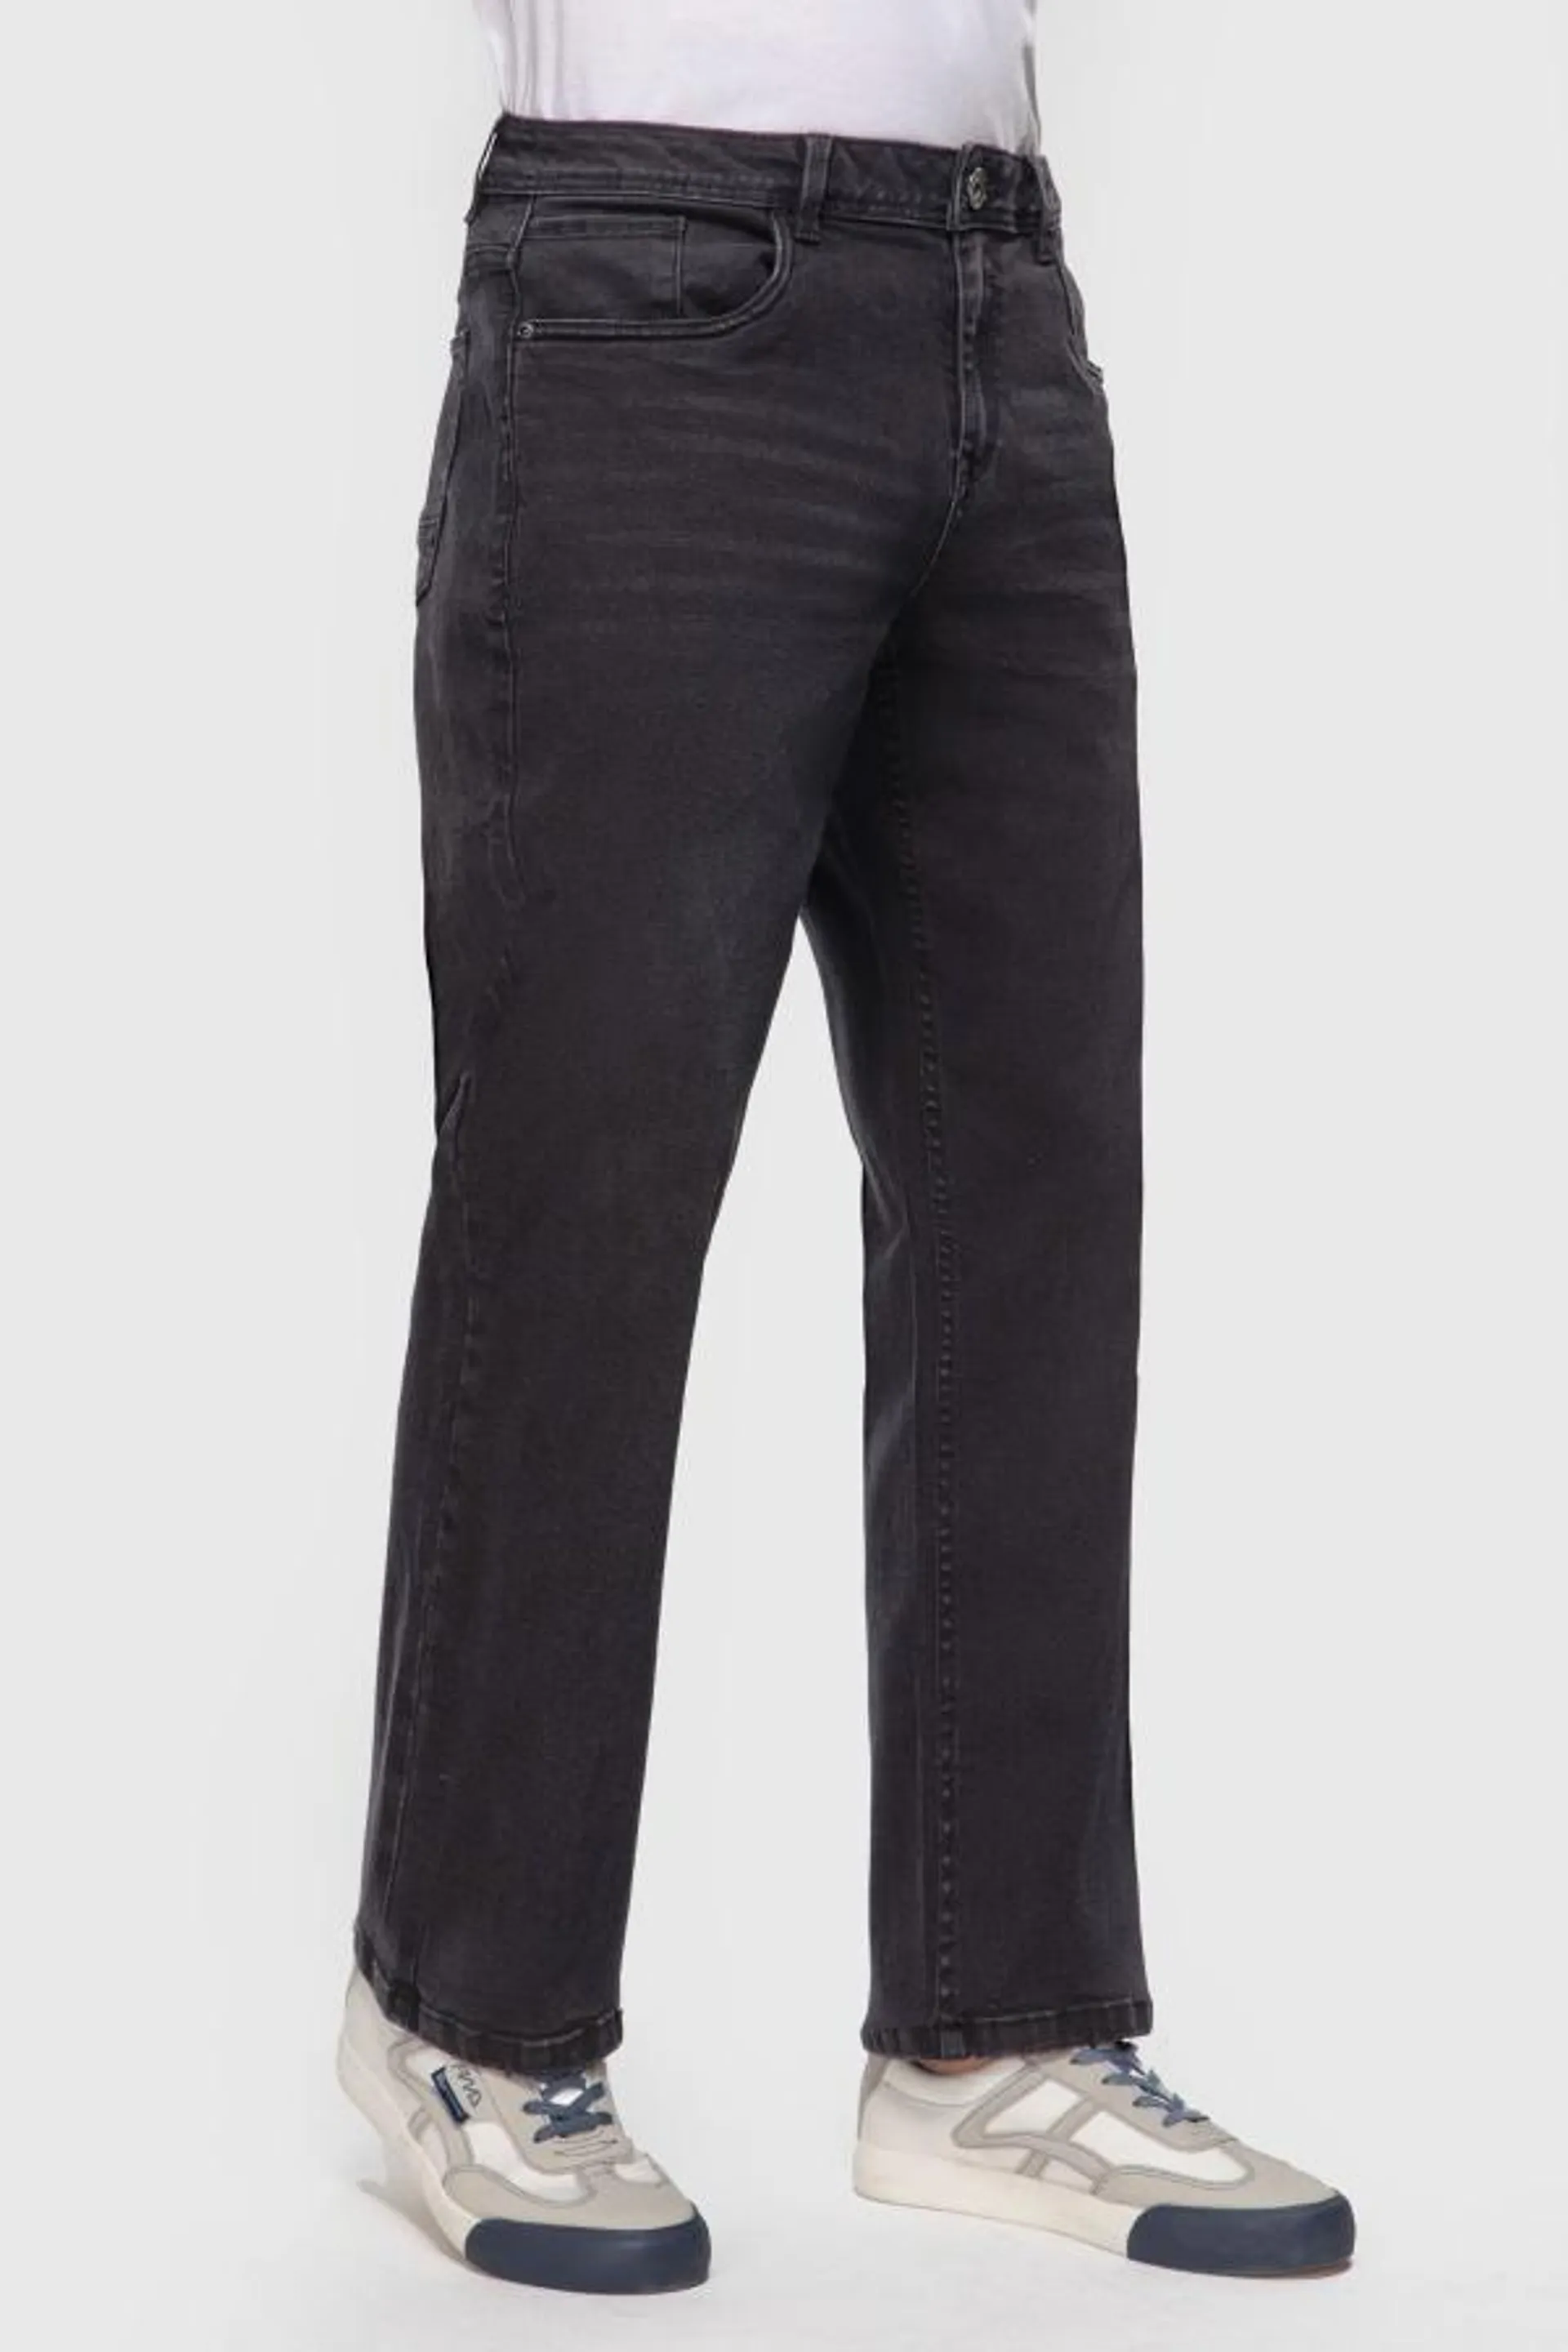 Jeans hombre straight 605 negro